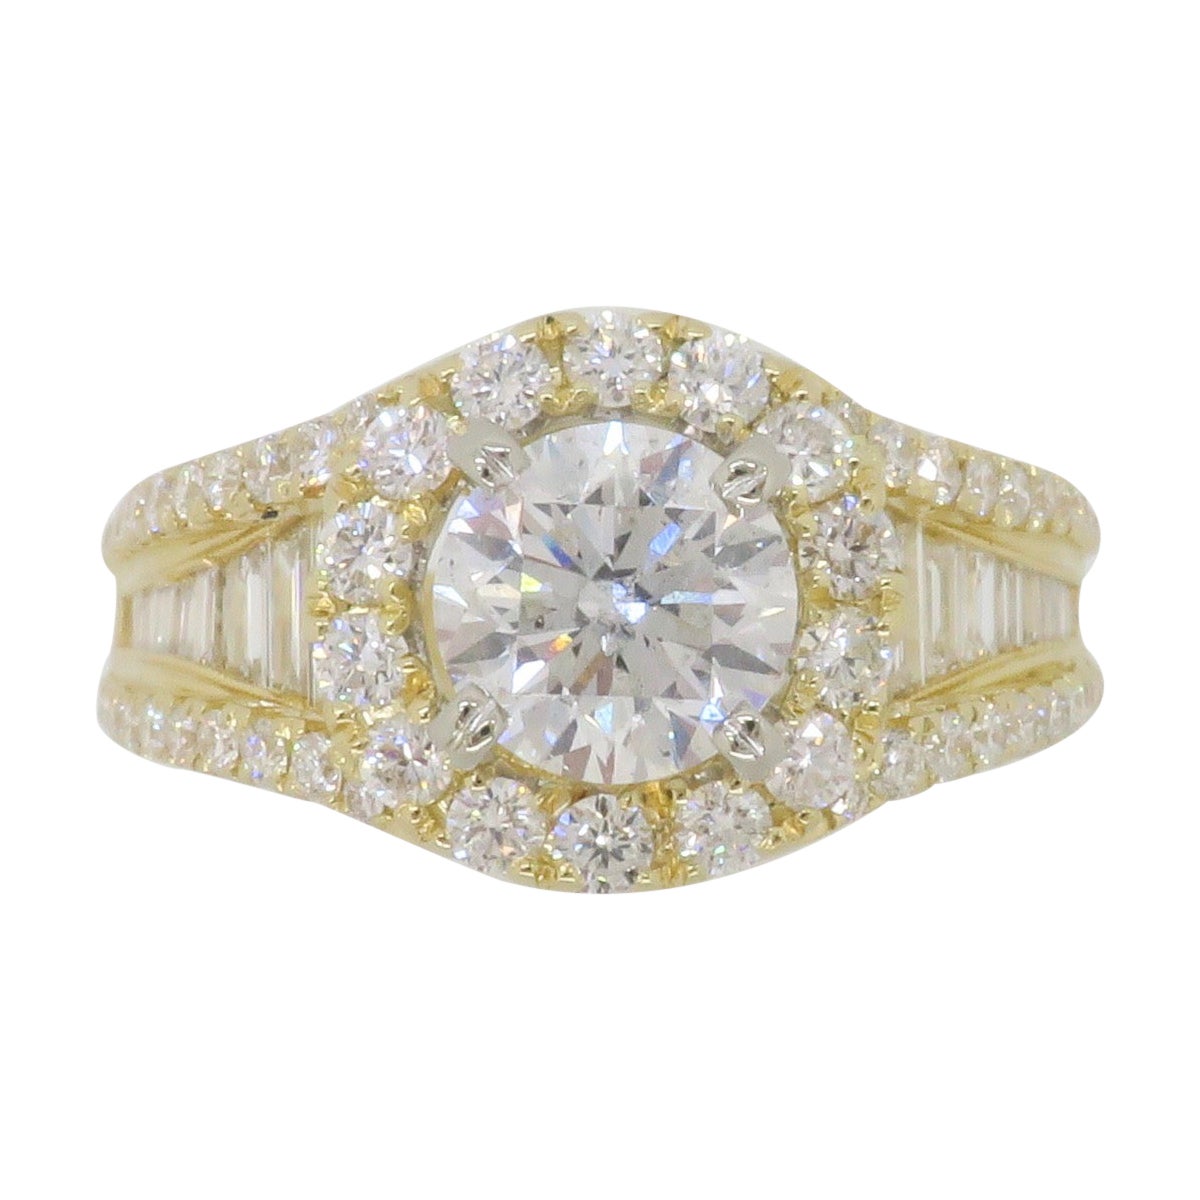 2.04CTW Diamond Engagement Ring in 14k Yellow Gold